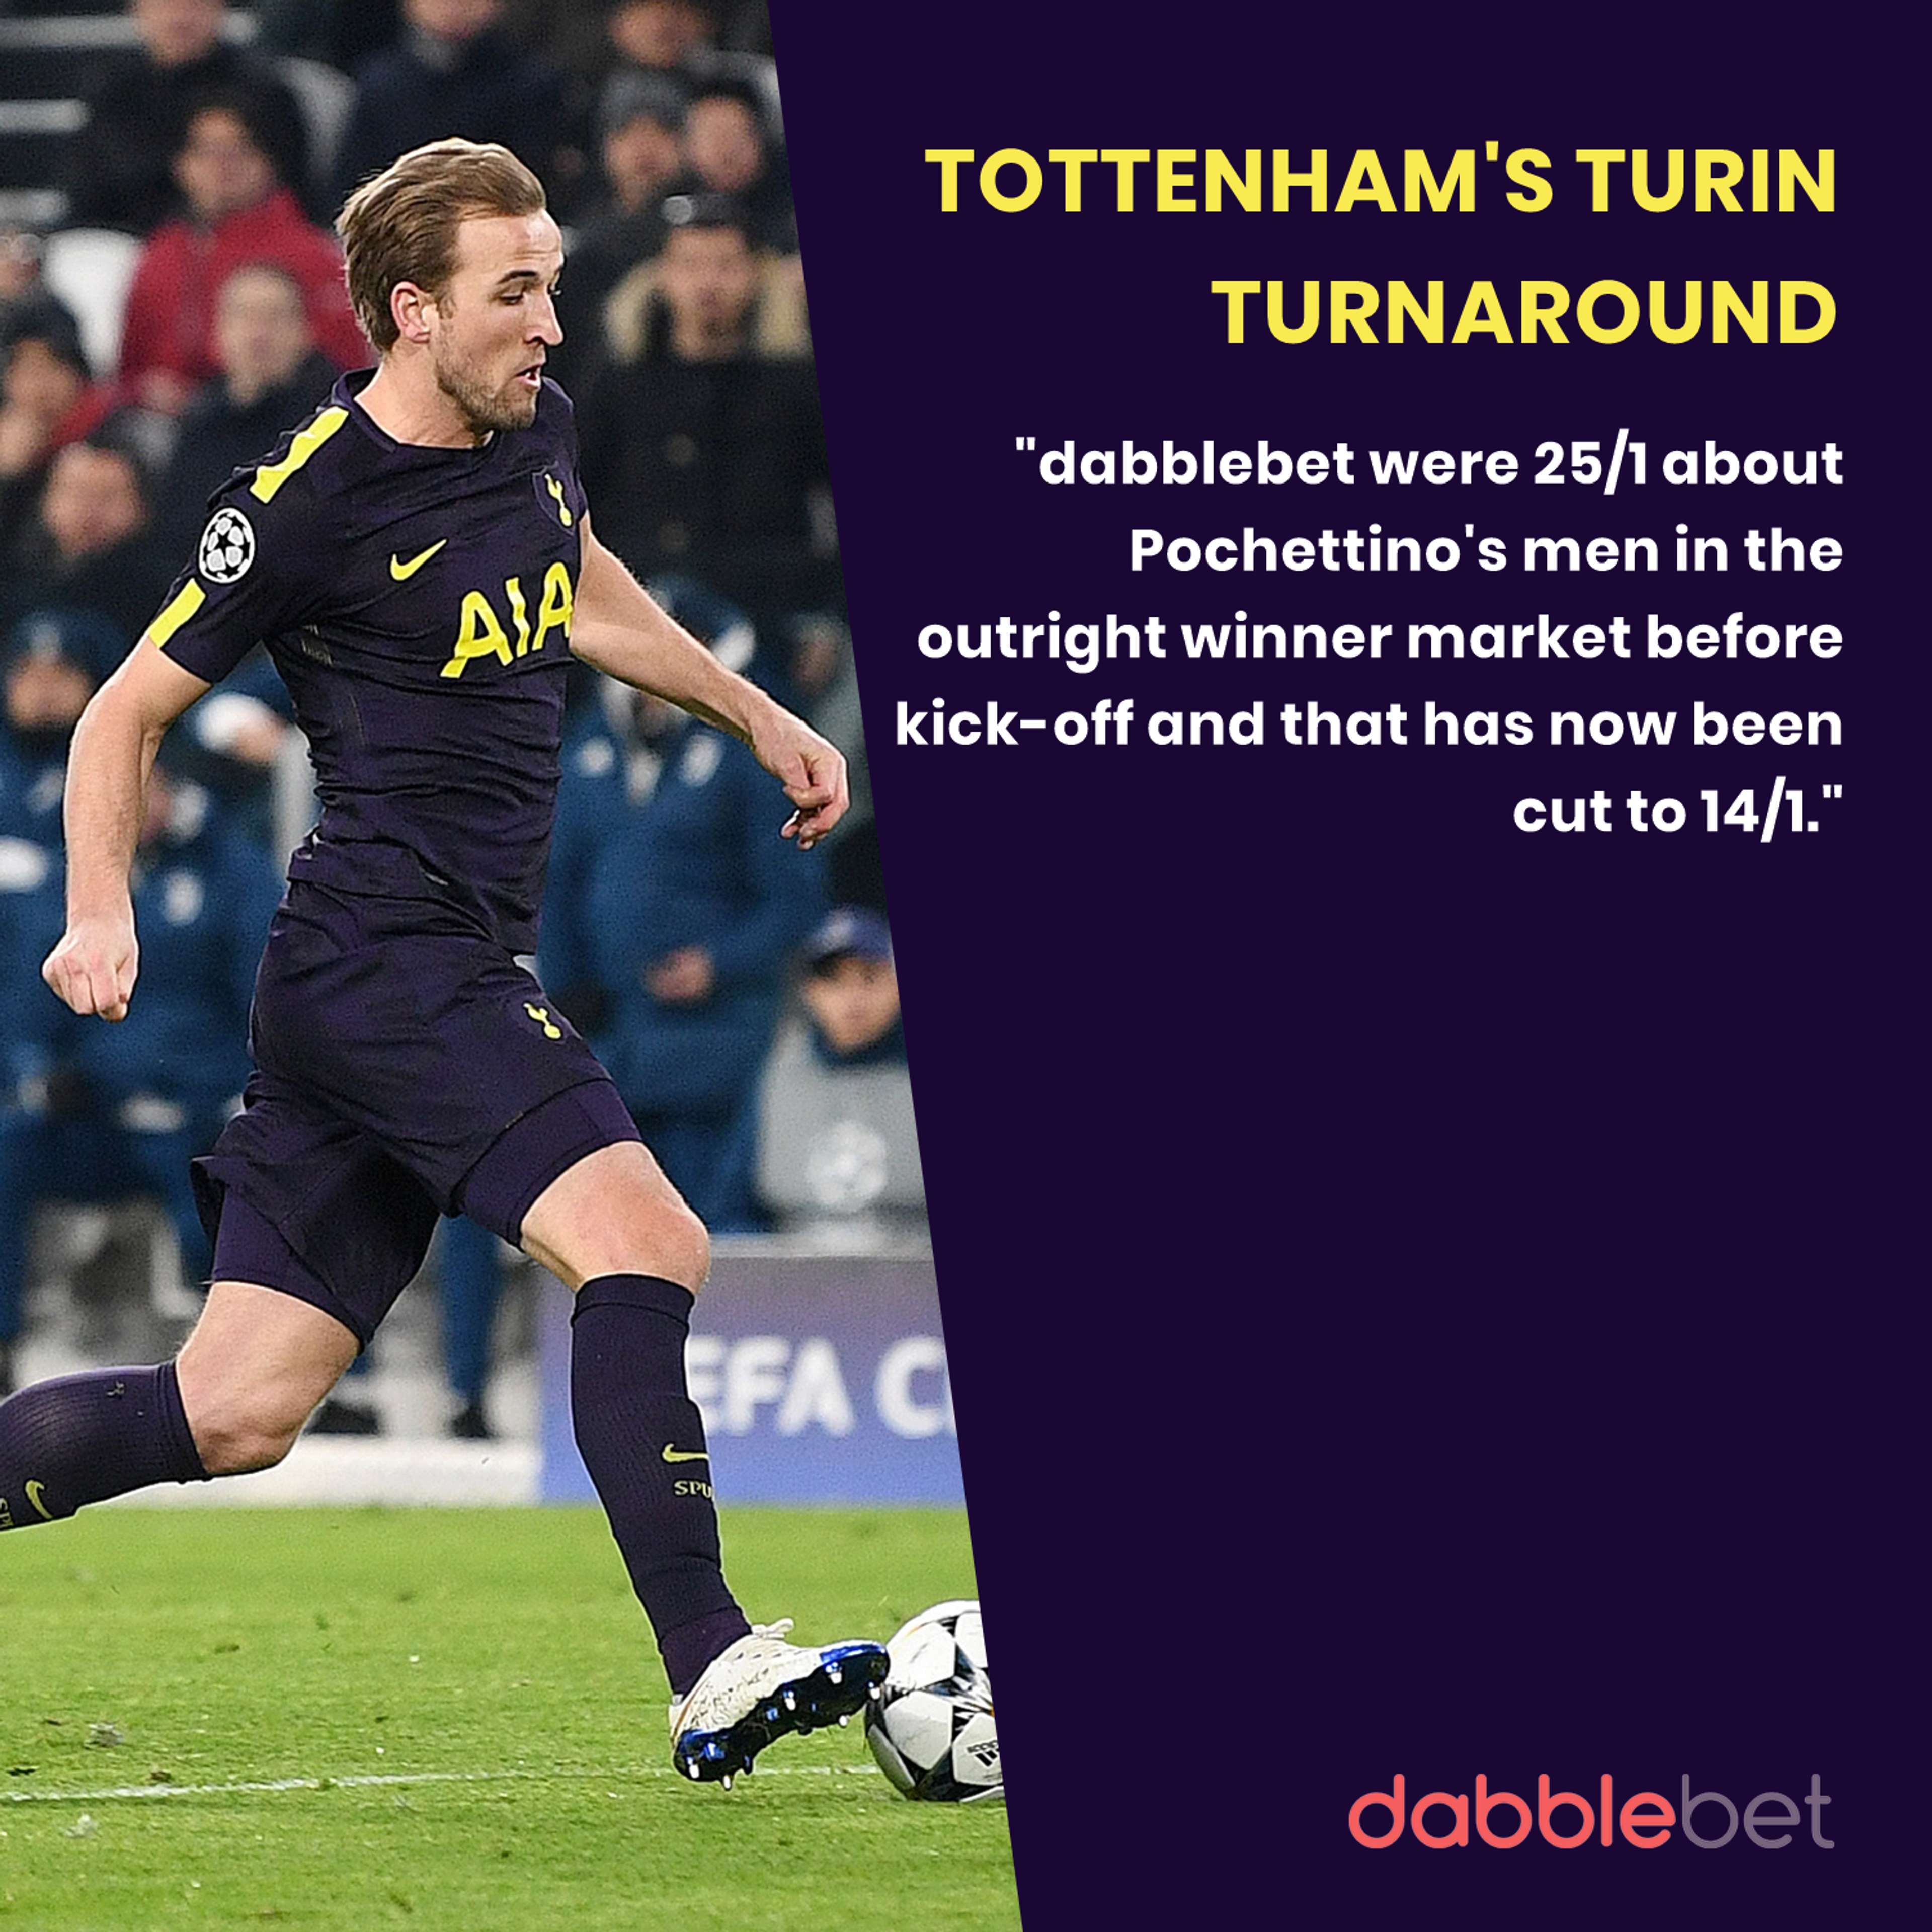 GFX Tottenham's Turin Turnaround odds via dabblebet